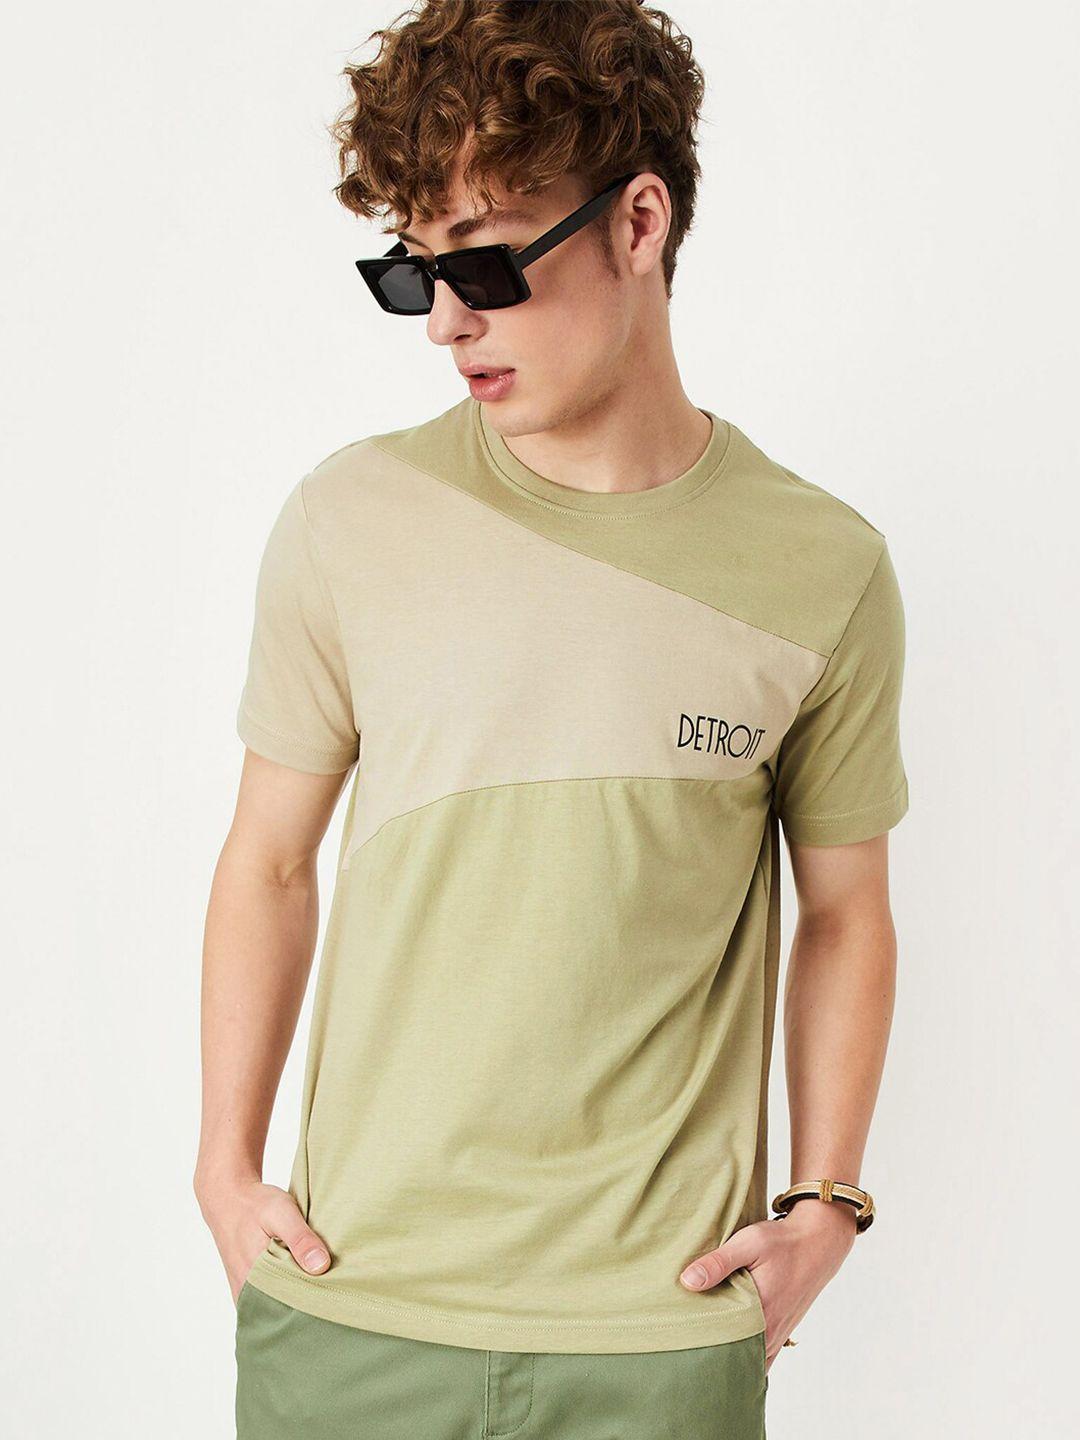 max colourblocked short sleeves pure cotton t-shirt